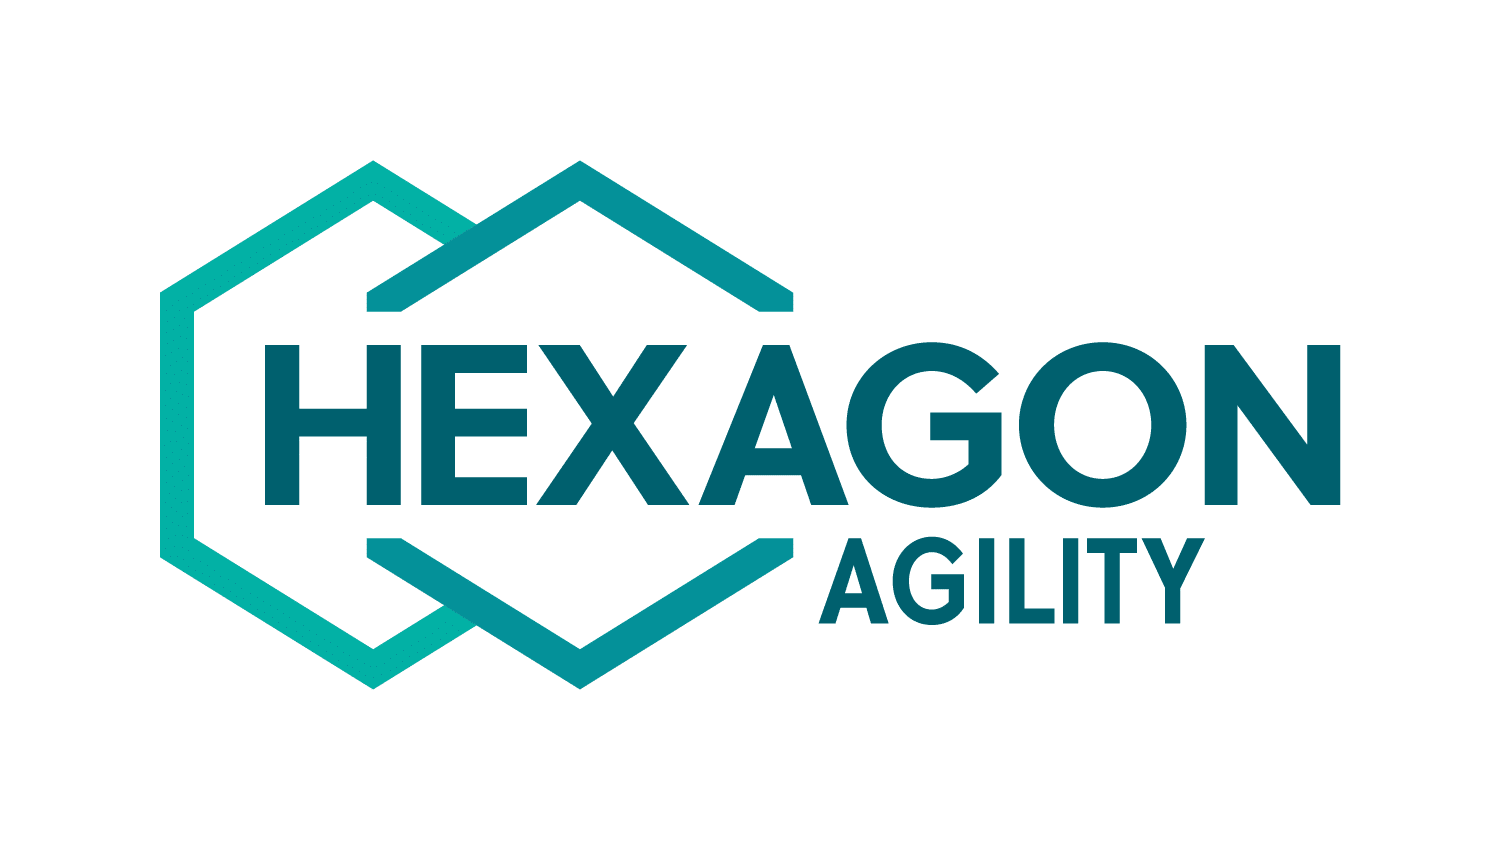 HEXAGON_AGILITY_LOGO_POS_RGB.png